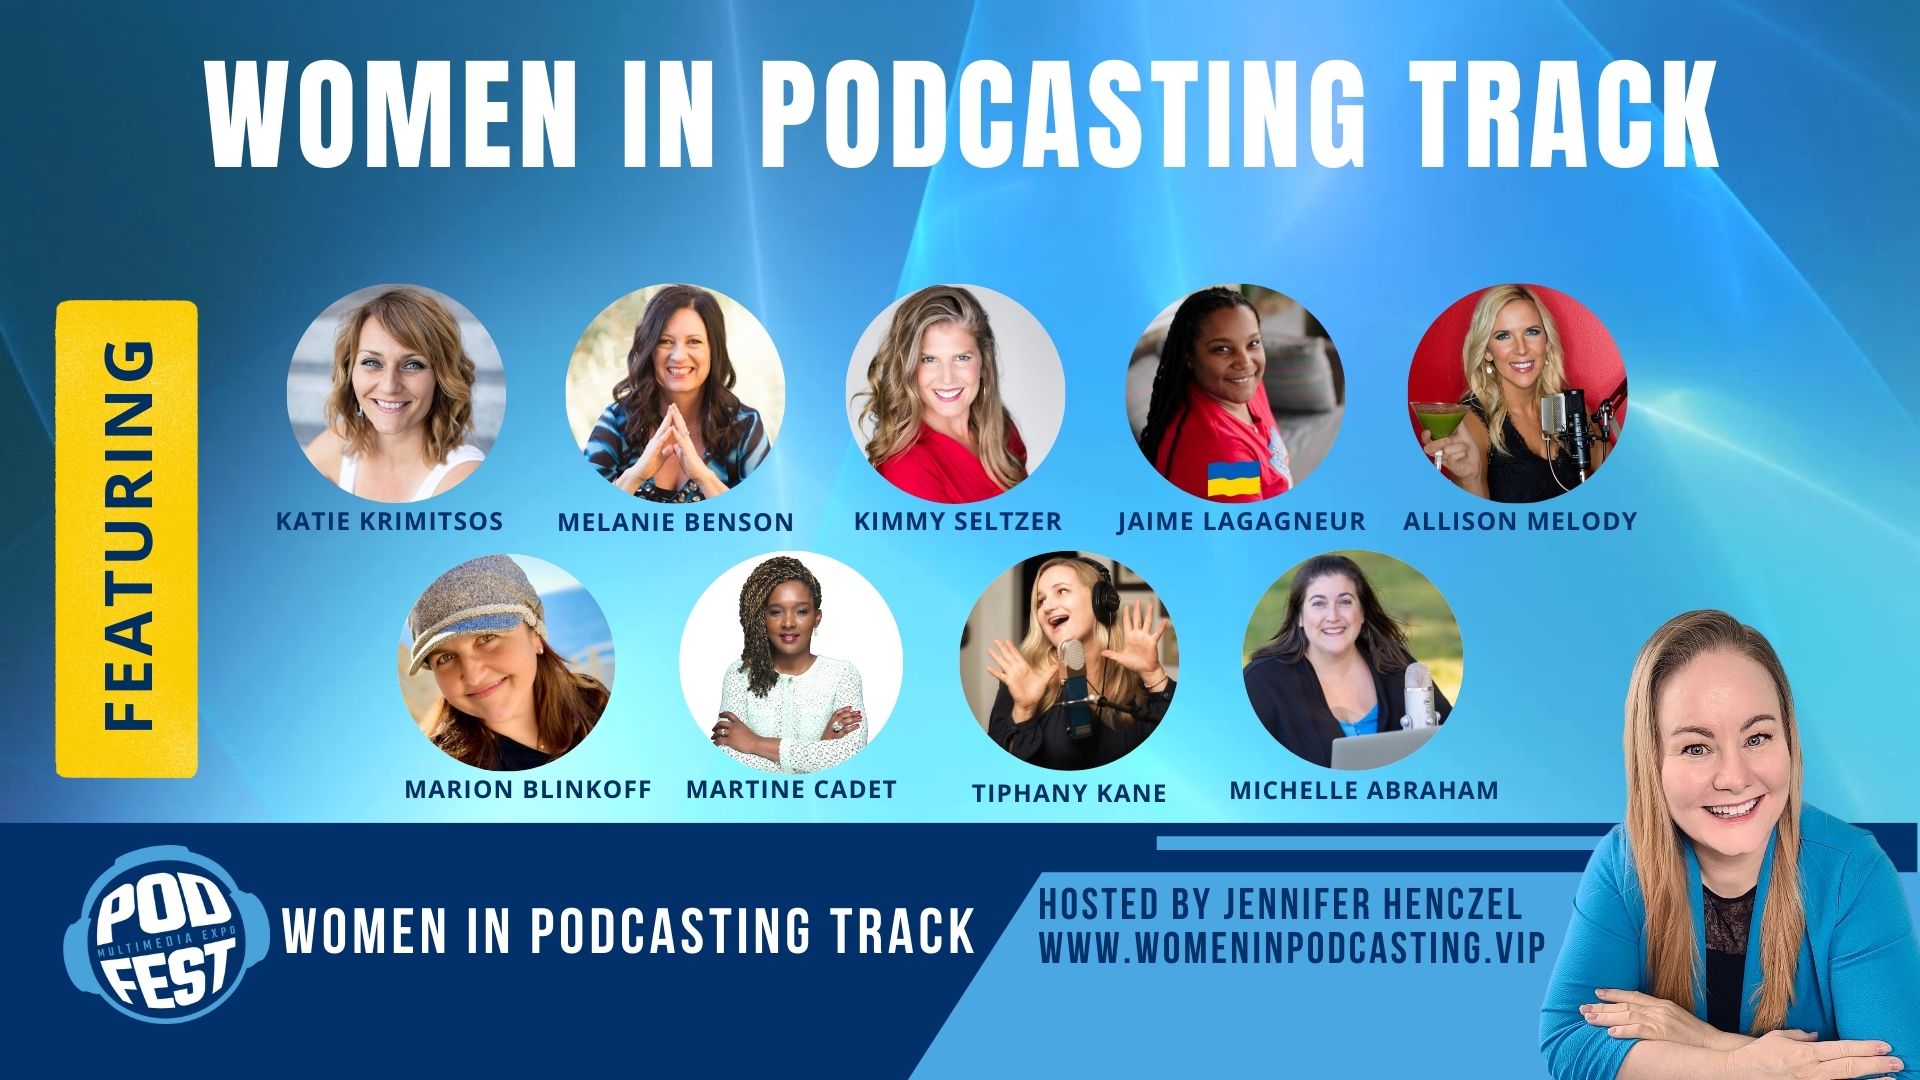 Women in Podcasting Track at Podfest hosted by Jennifer Henczel 